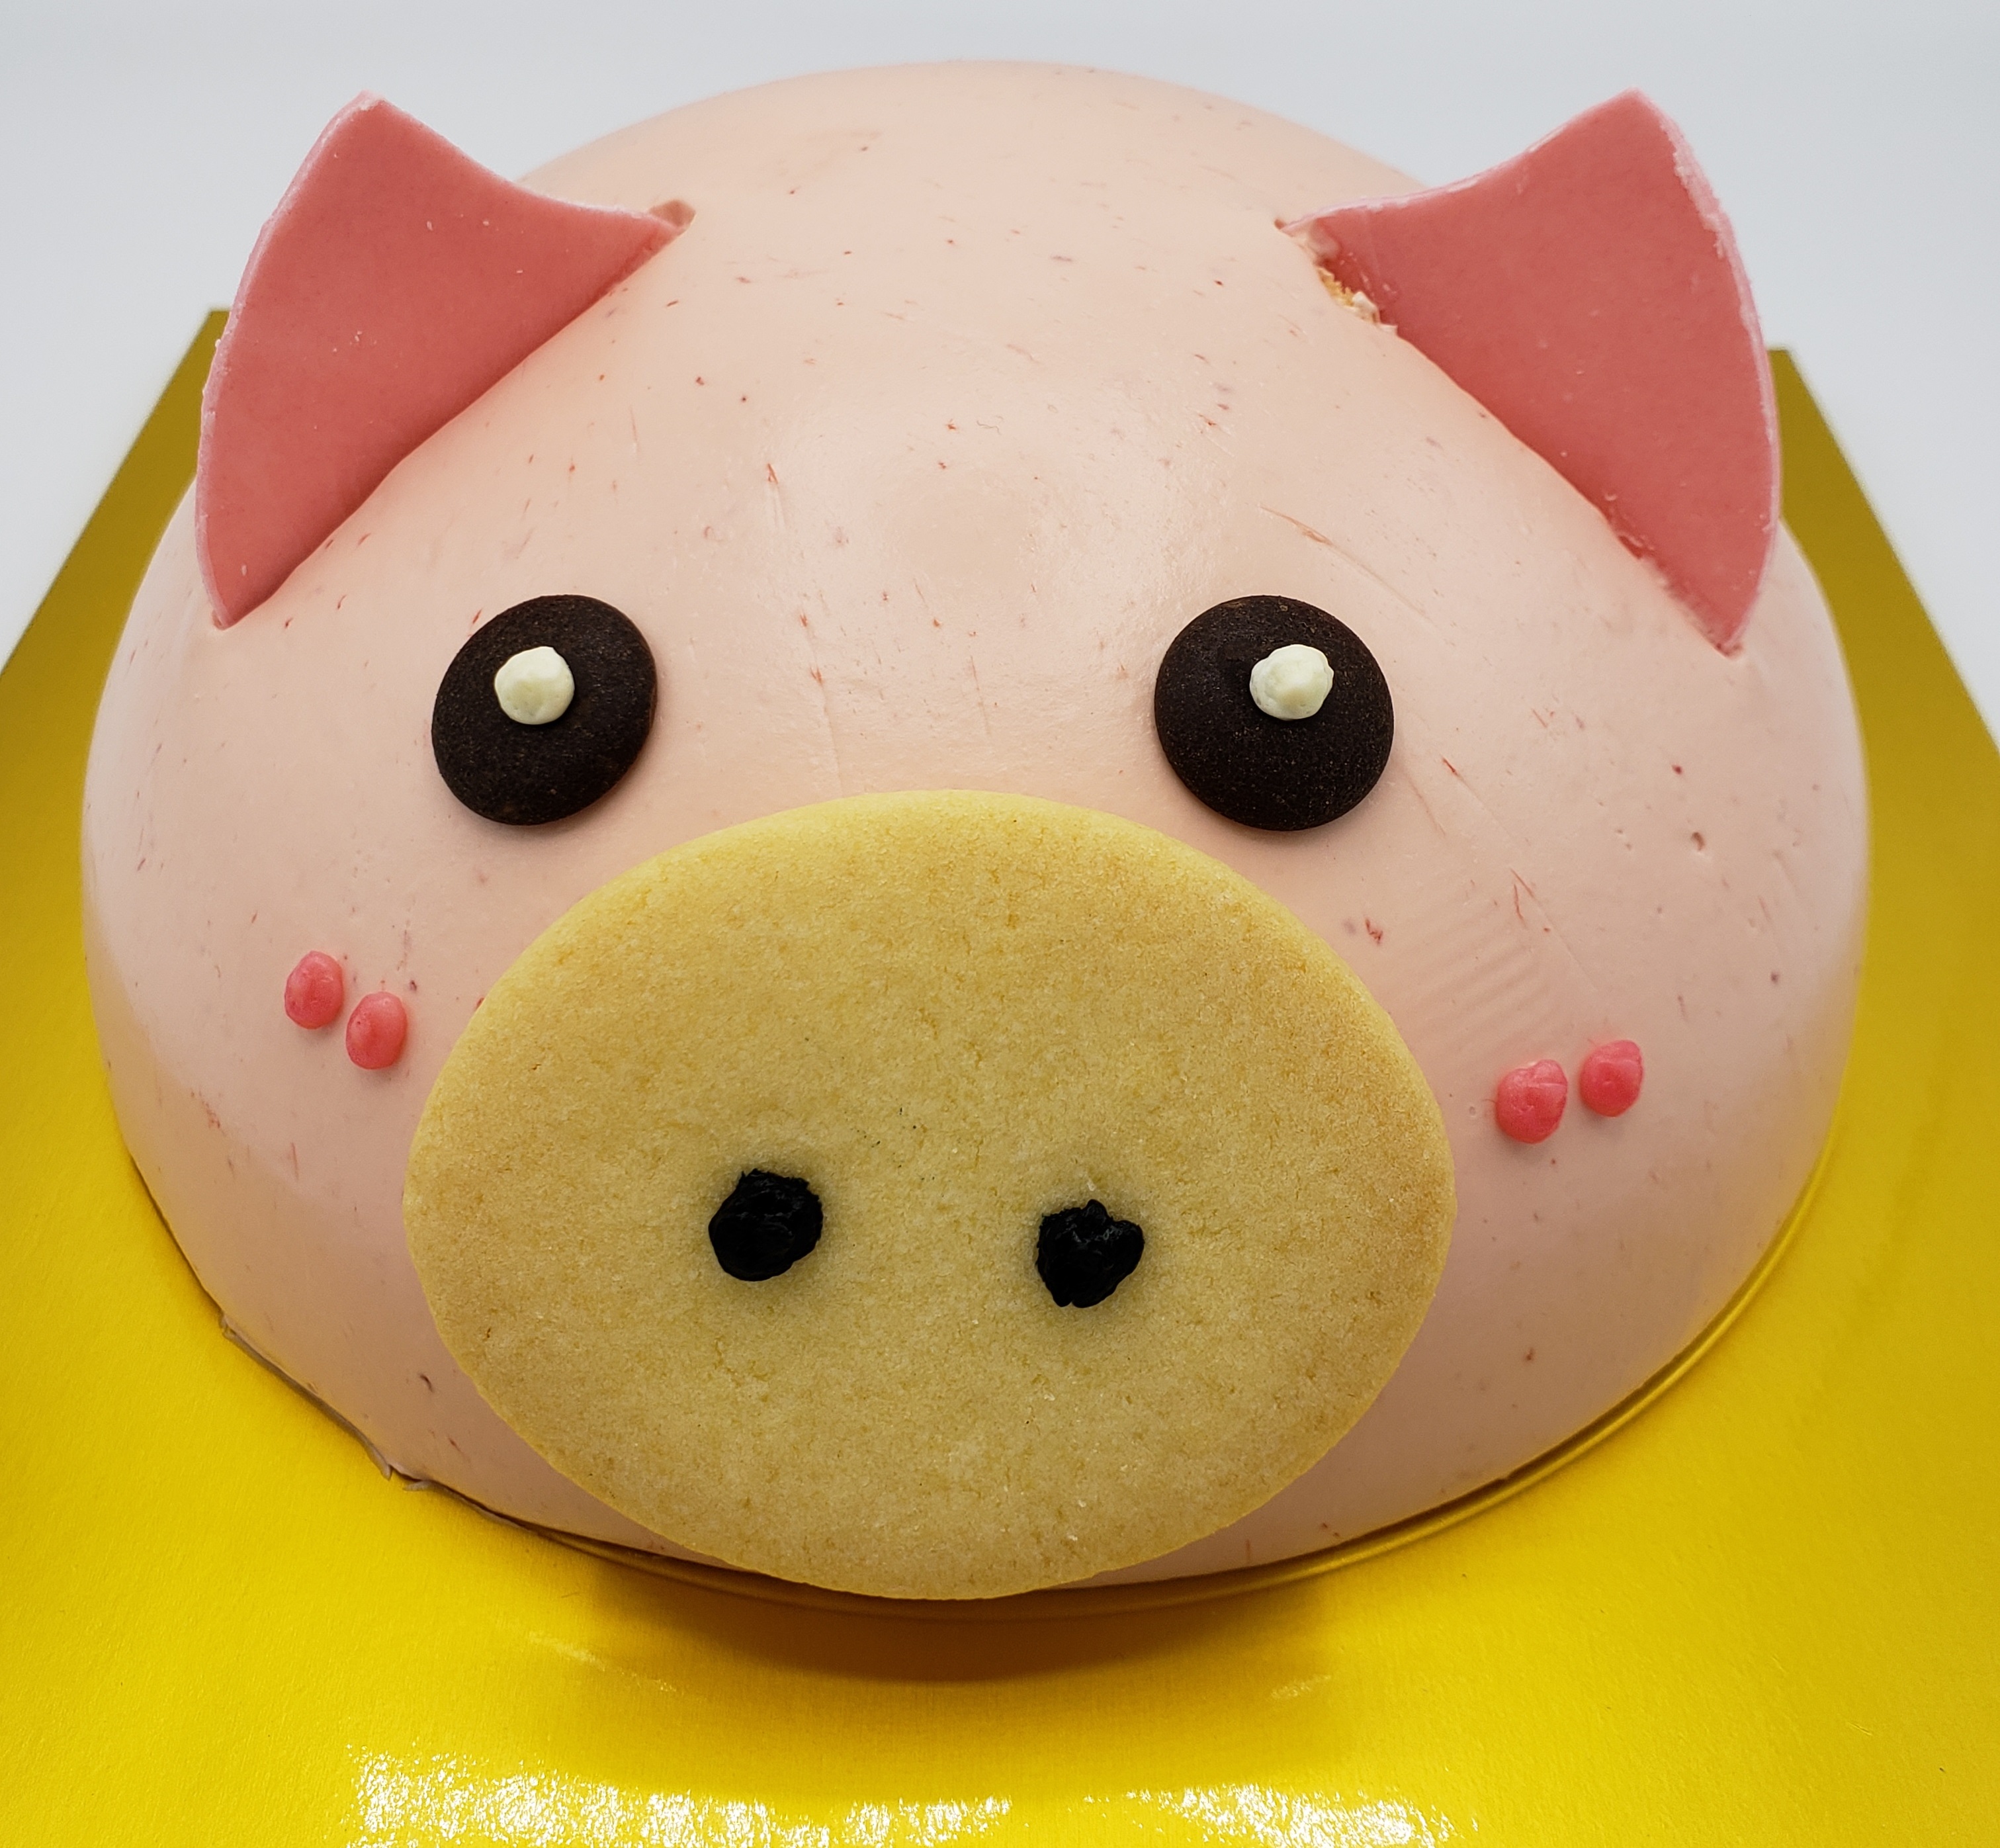 Send Peppa Pig Fondant cake For Your Little Princess Online - GAL21-96124 |  Giftalove